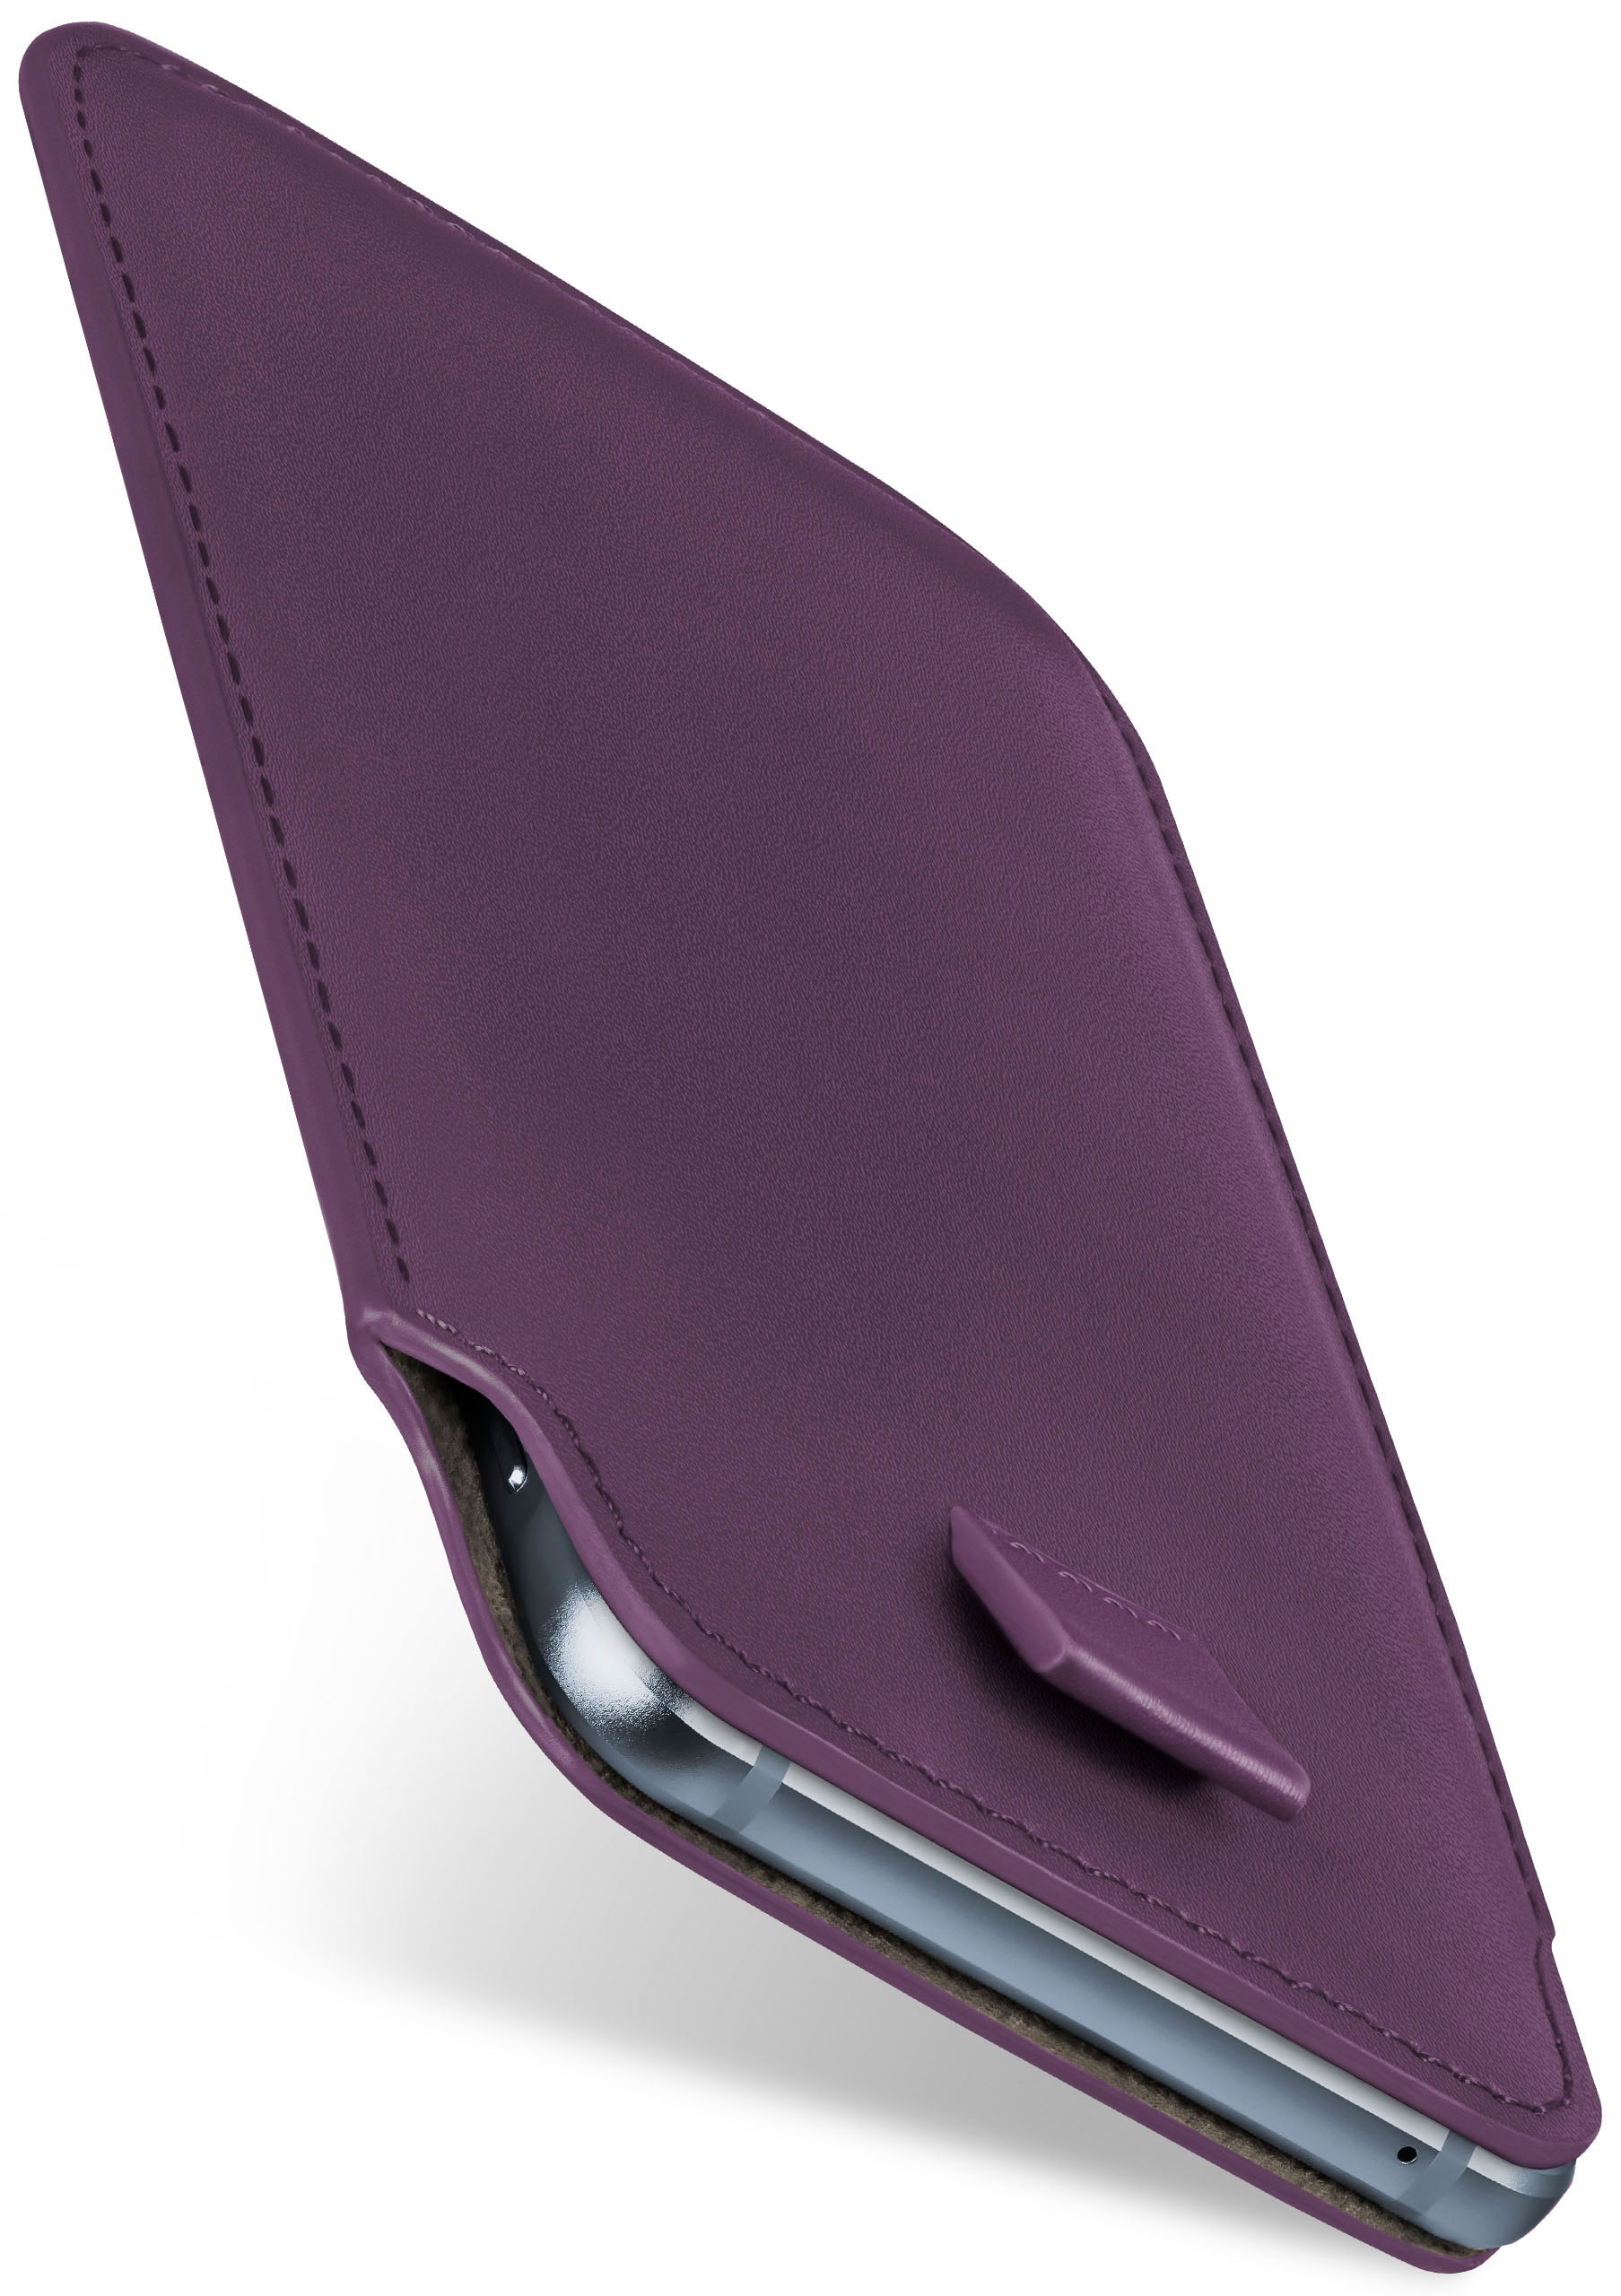 MOEX Full Sony, Slide XA, Case, Indigo-Violet Cover, Xperia